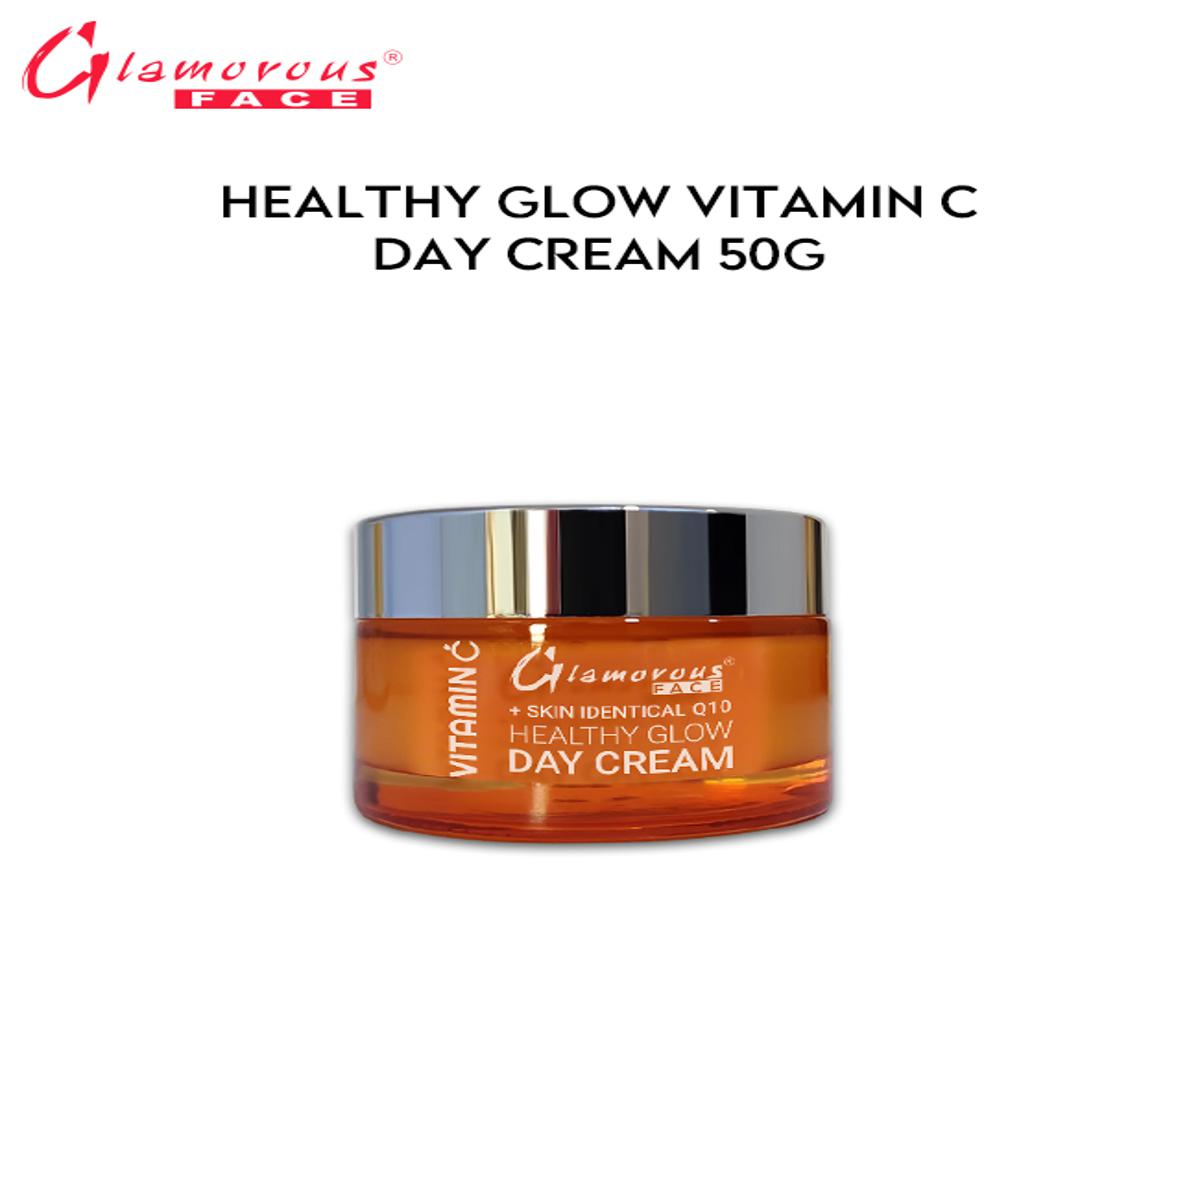 Glamorous Face Vitamin C Day Cream + Skin Identical Q10 Healthy Glow | 100% Organic Multi - Function 50g